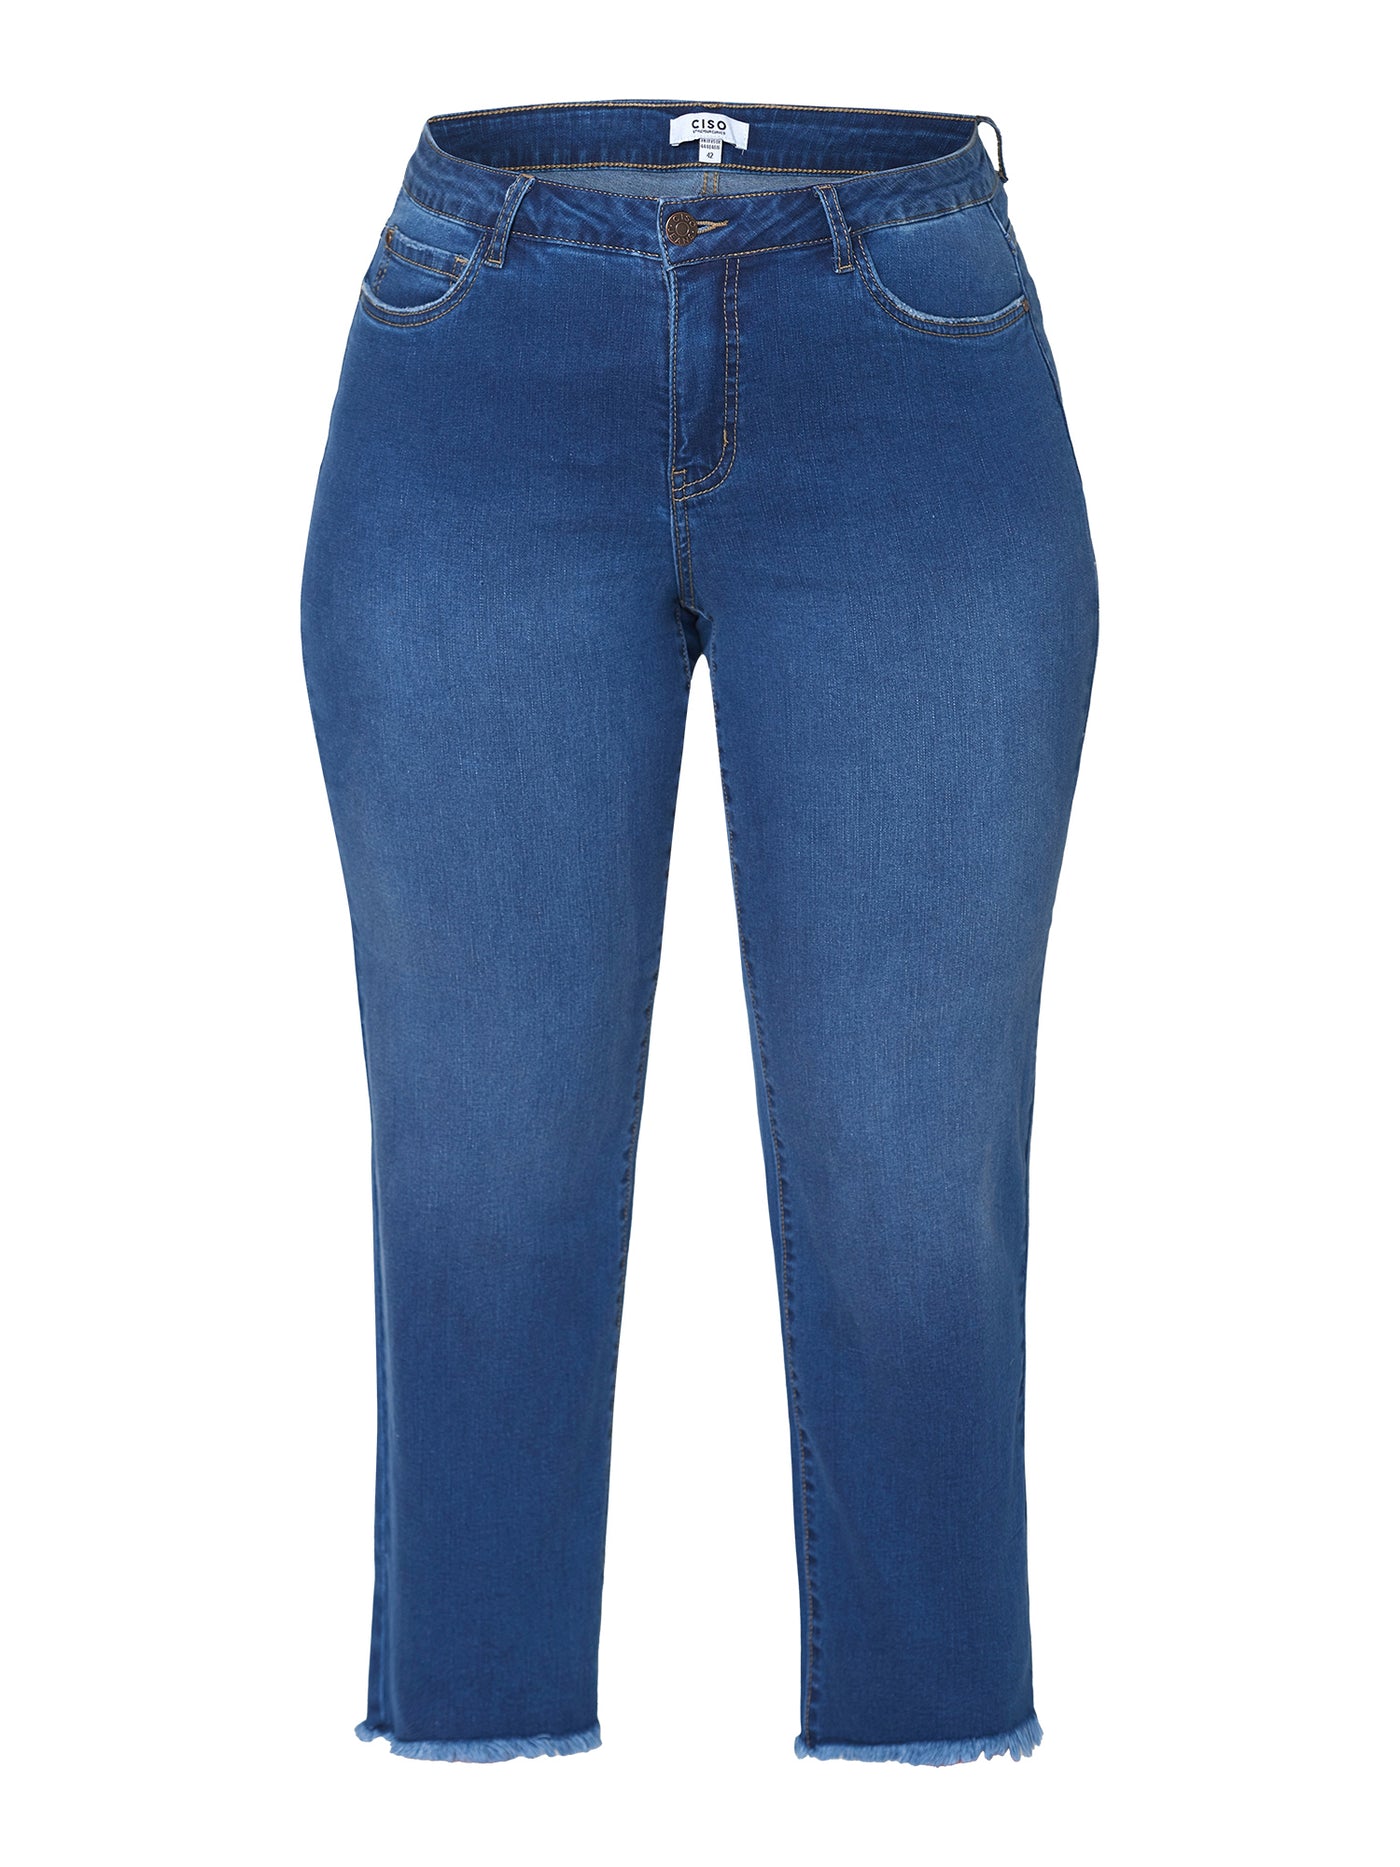 Selma med lige ben - 7/8 Jeans - Medium blå